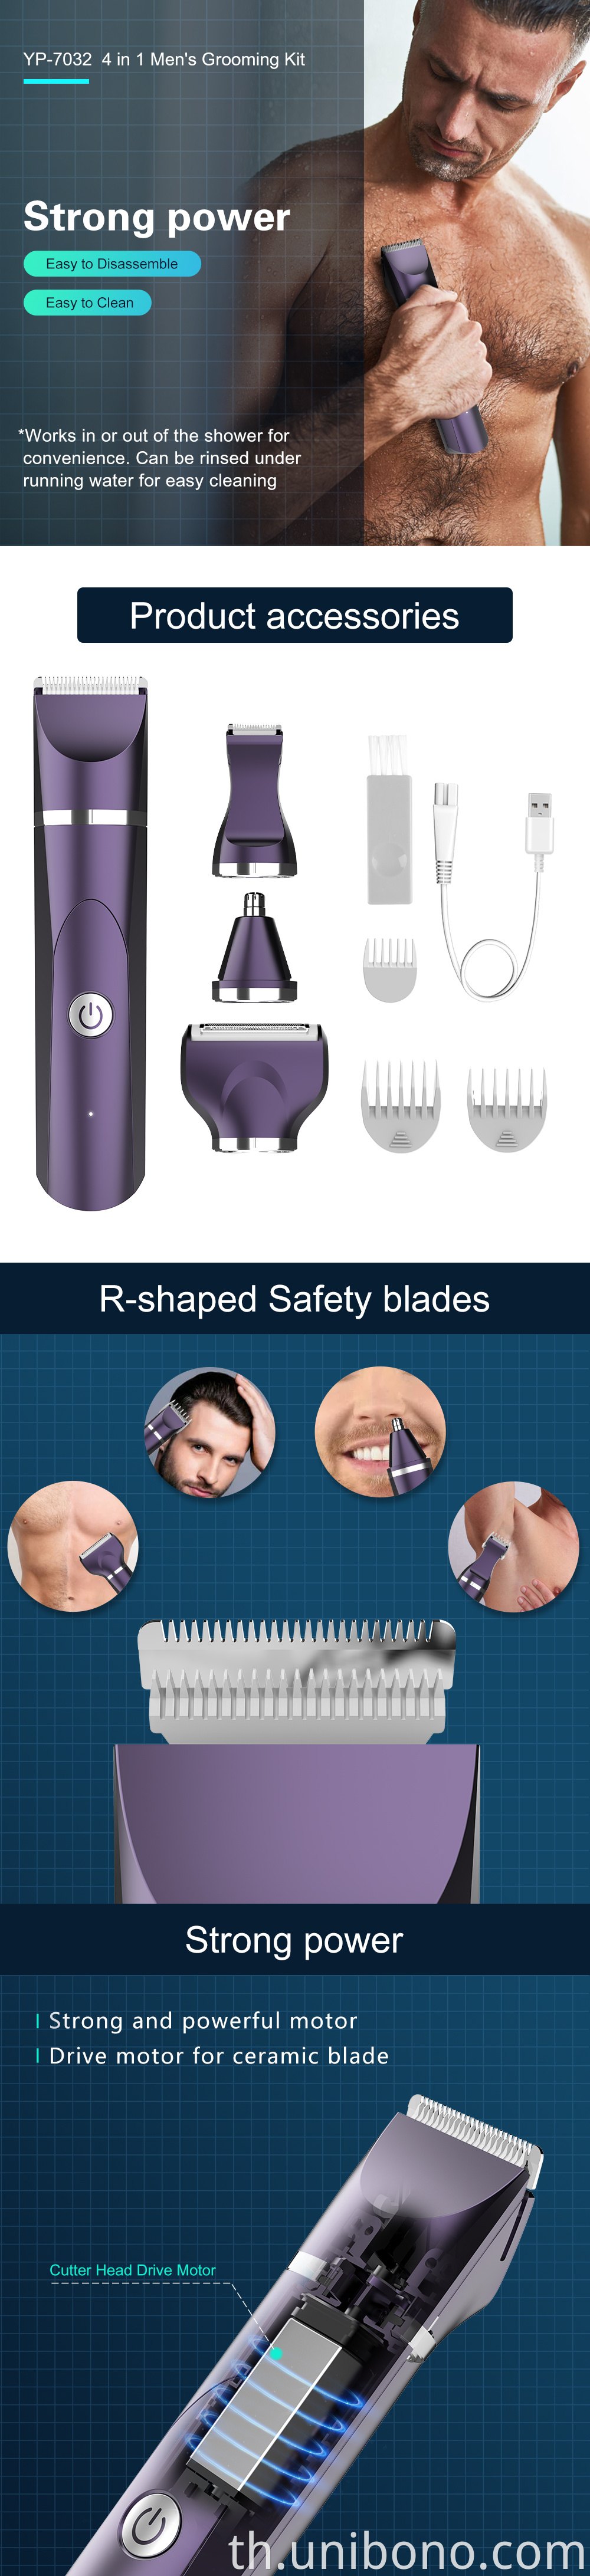 Electric Body Hair Trimmer Grooming kit for Men